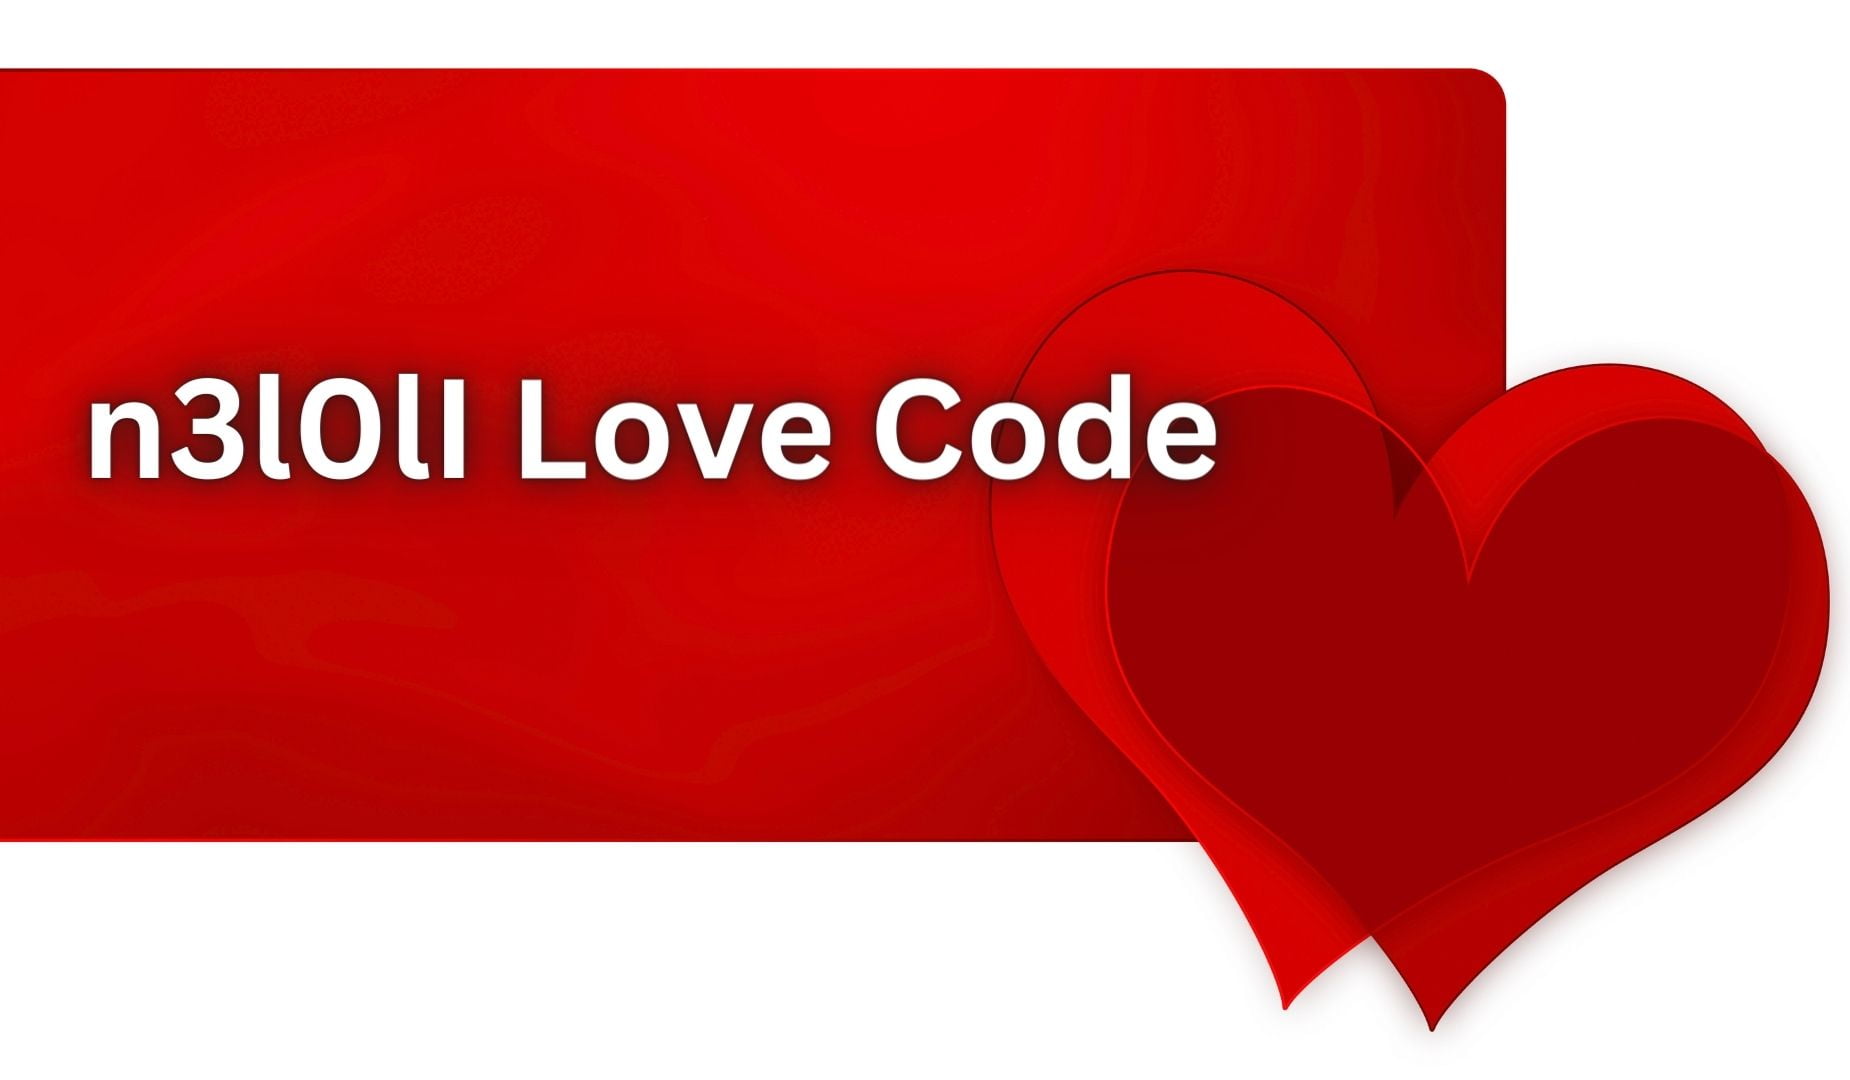 I love you цифрами. Люблю тебя на математическом языке. I Love code. Код i Love you в цифрах. I Love you to code.